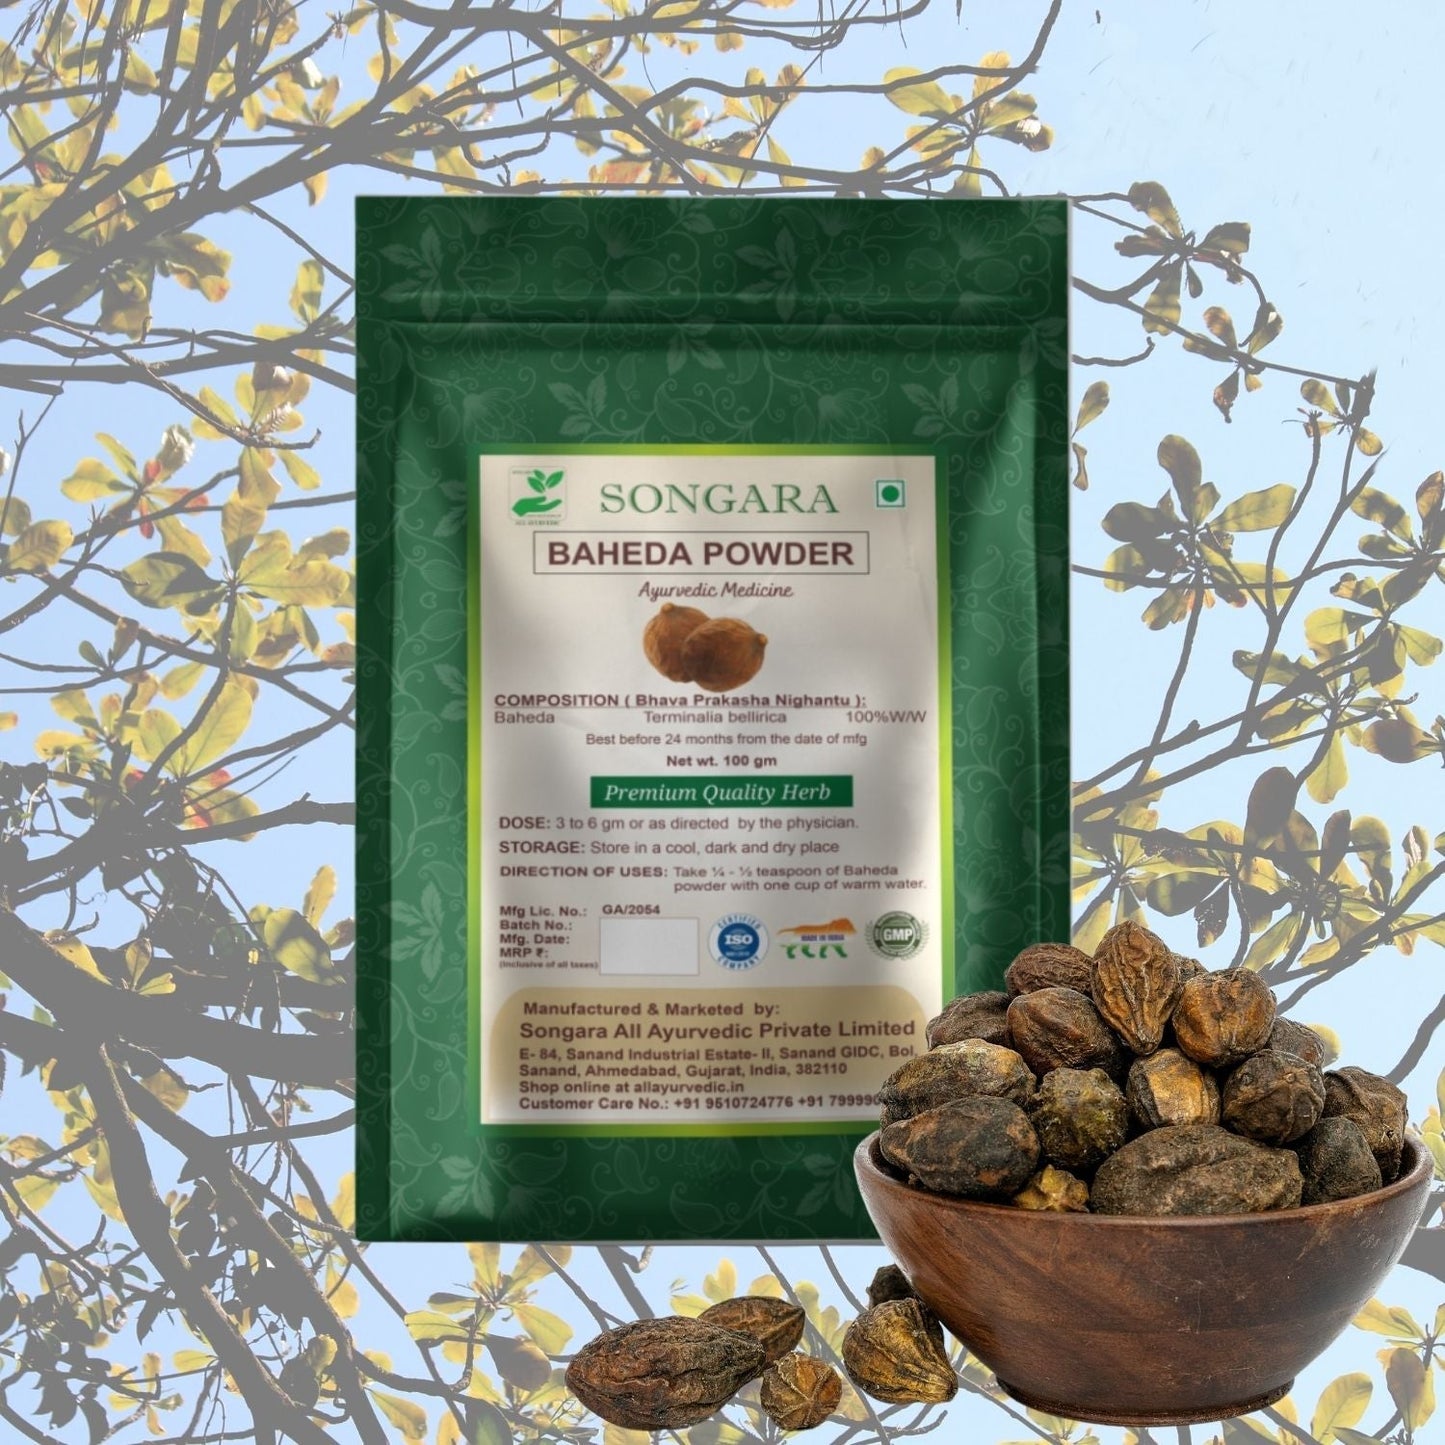 Songara Baheda Powder: (Terminalia bellirica) Natural & Ayurvedic Baheda Powder 100gm (1 Unit) - Songara All Ayurvedic